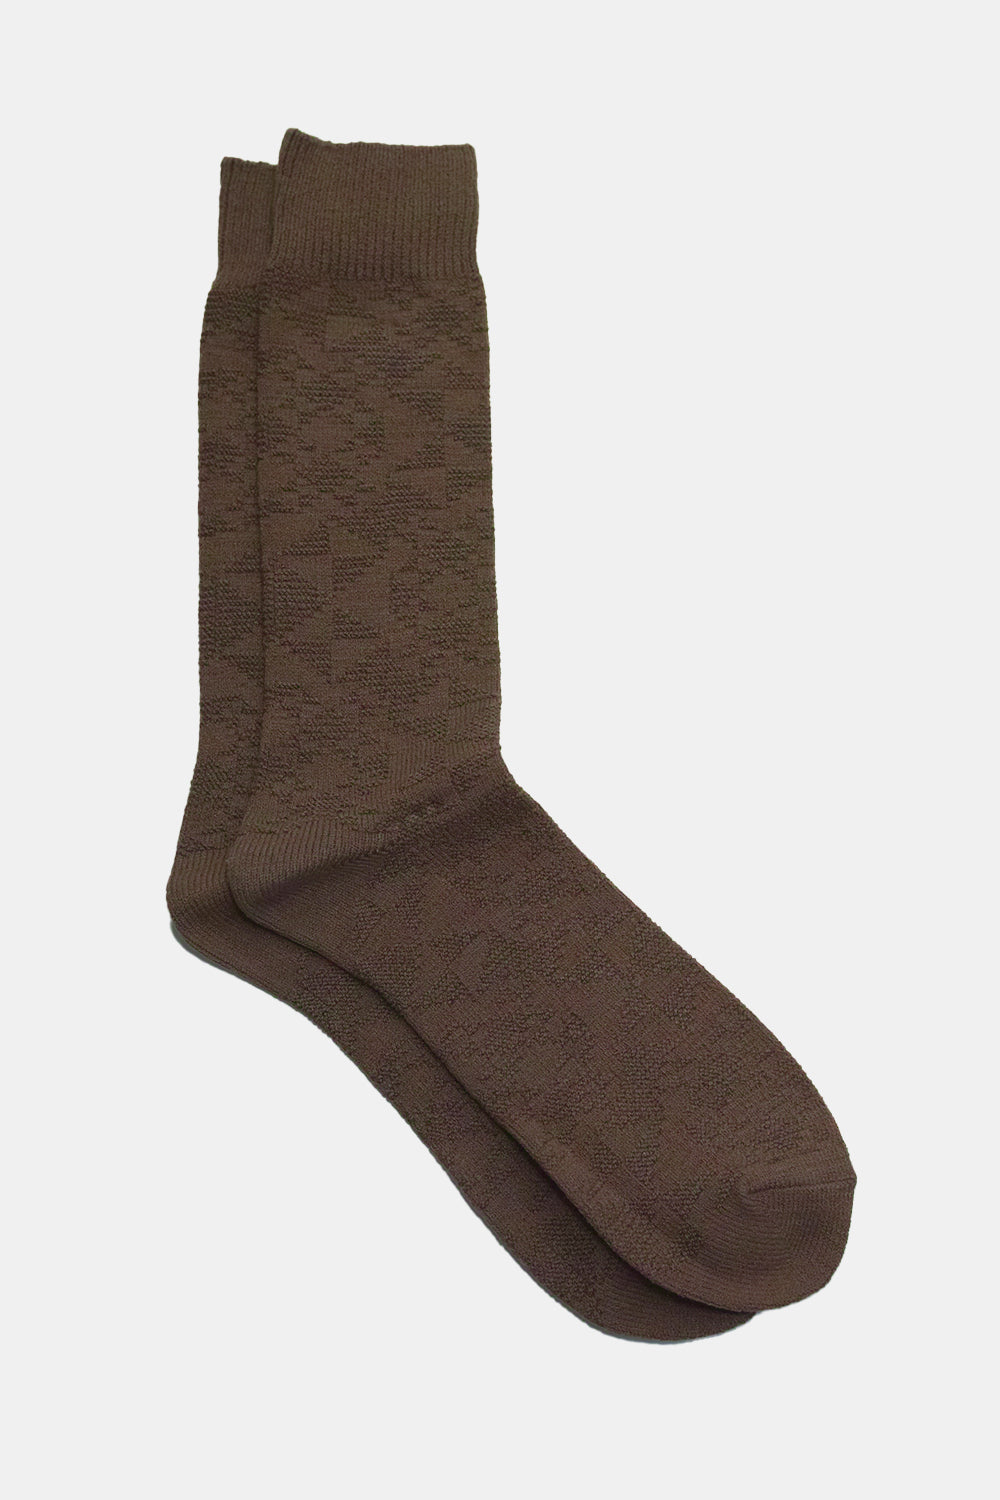 Anonymous Ism Quilt Knit Crew Socks (Khaki)
